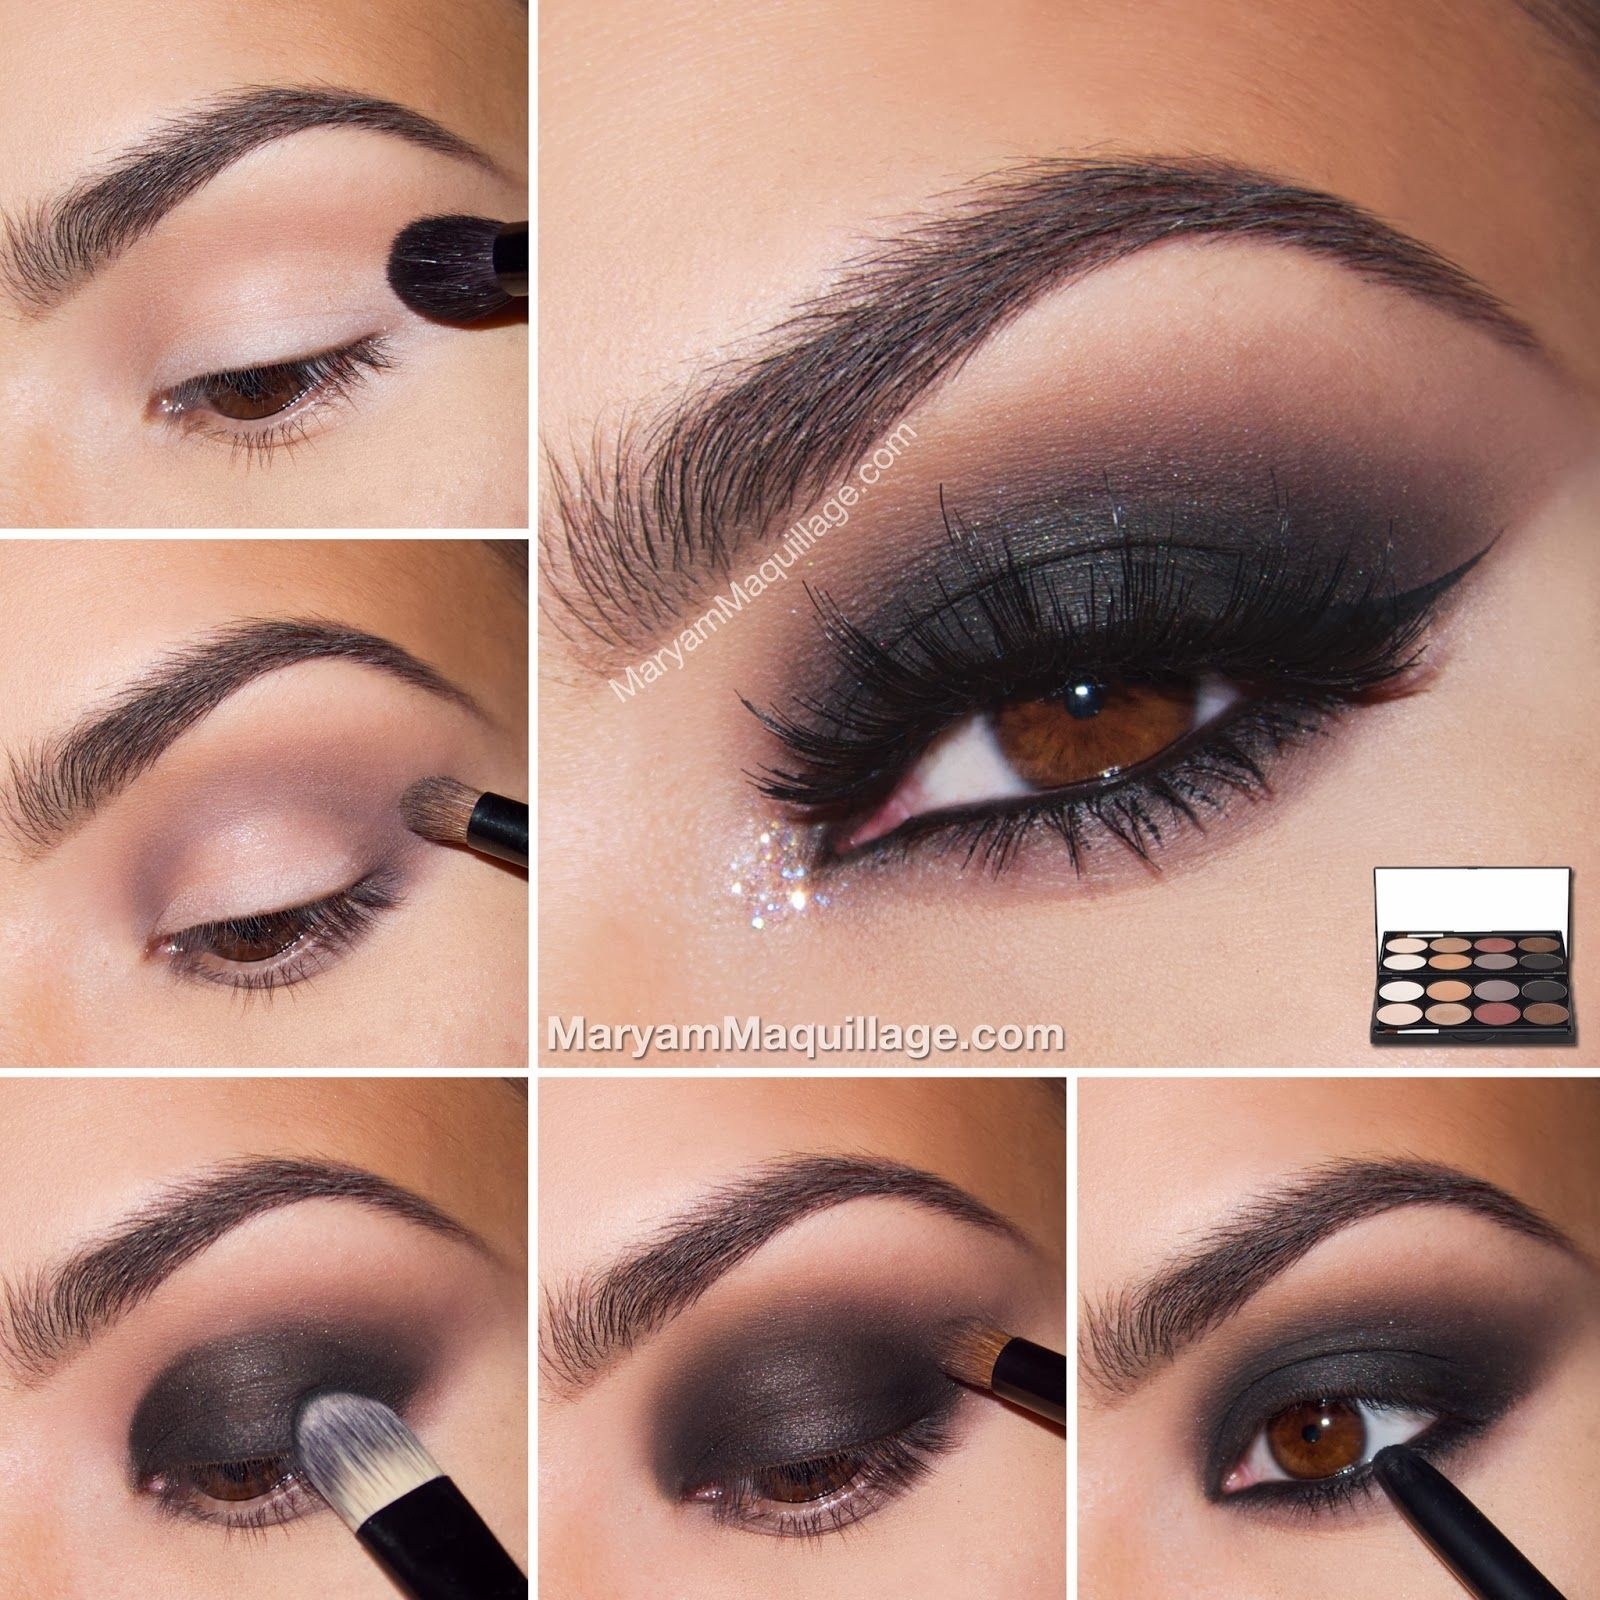 Maryam Maquillage: Classic Makeup: Contour &amp; Smoke | The Eye Of My with regard to Smokey Eye Makeup Tips For Brown Eyes